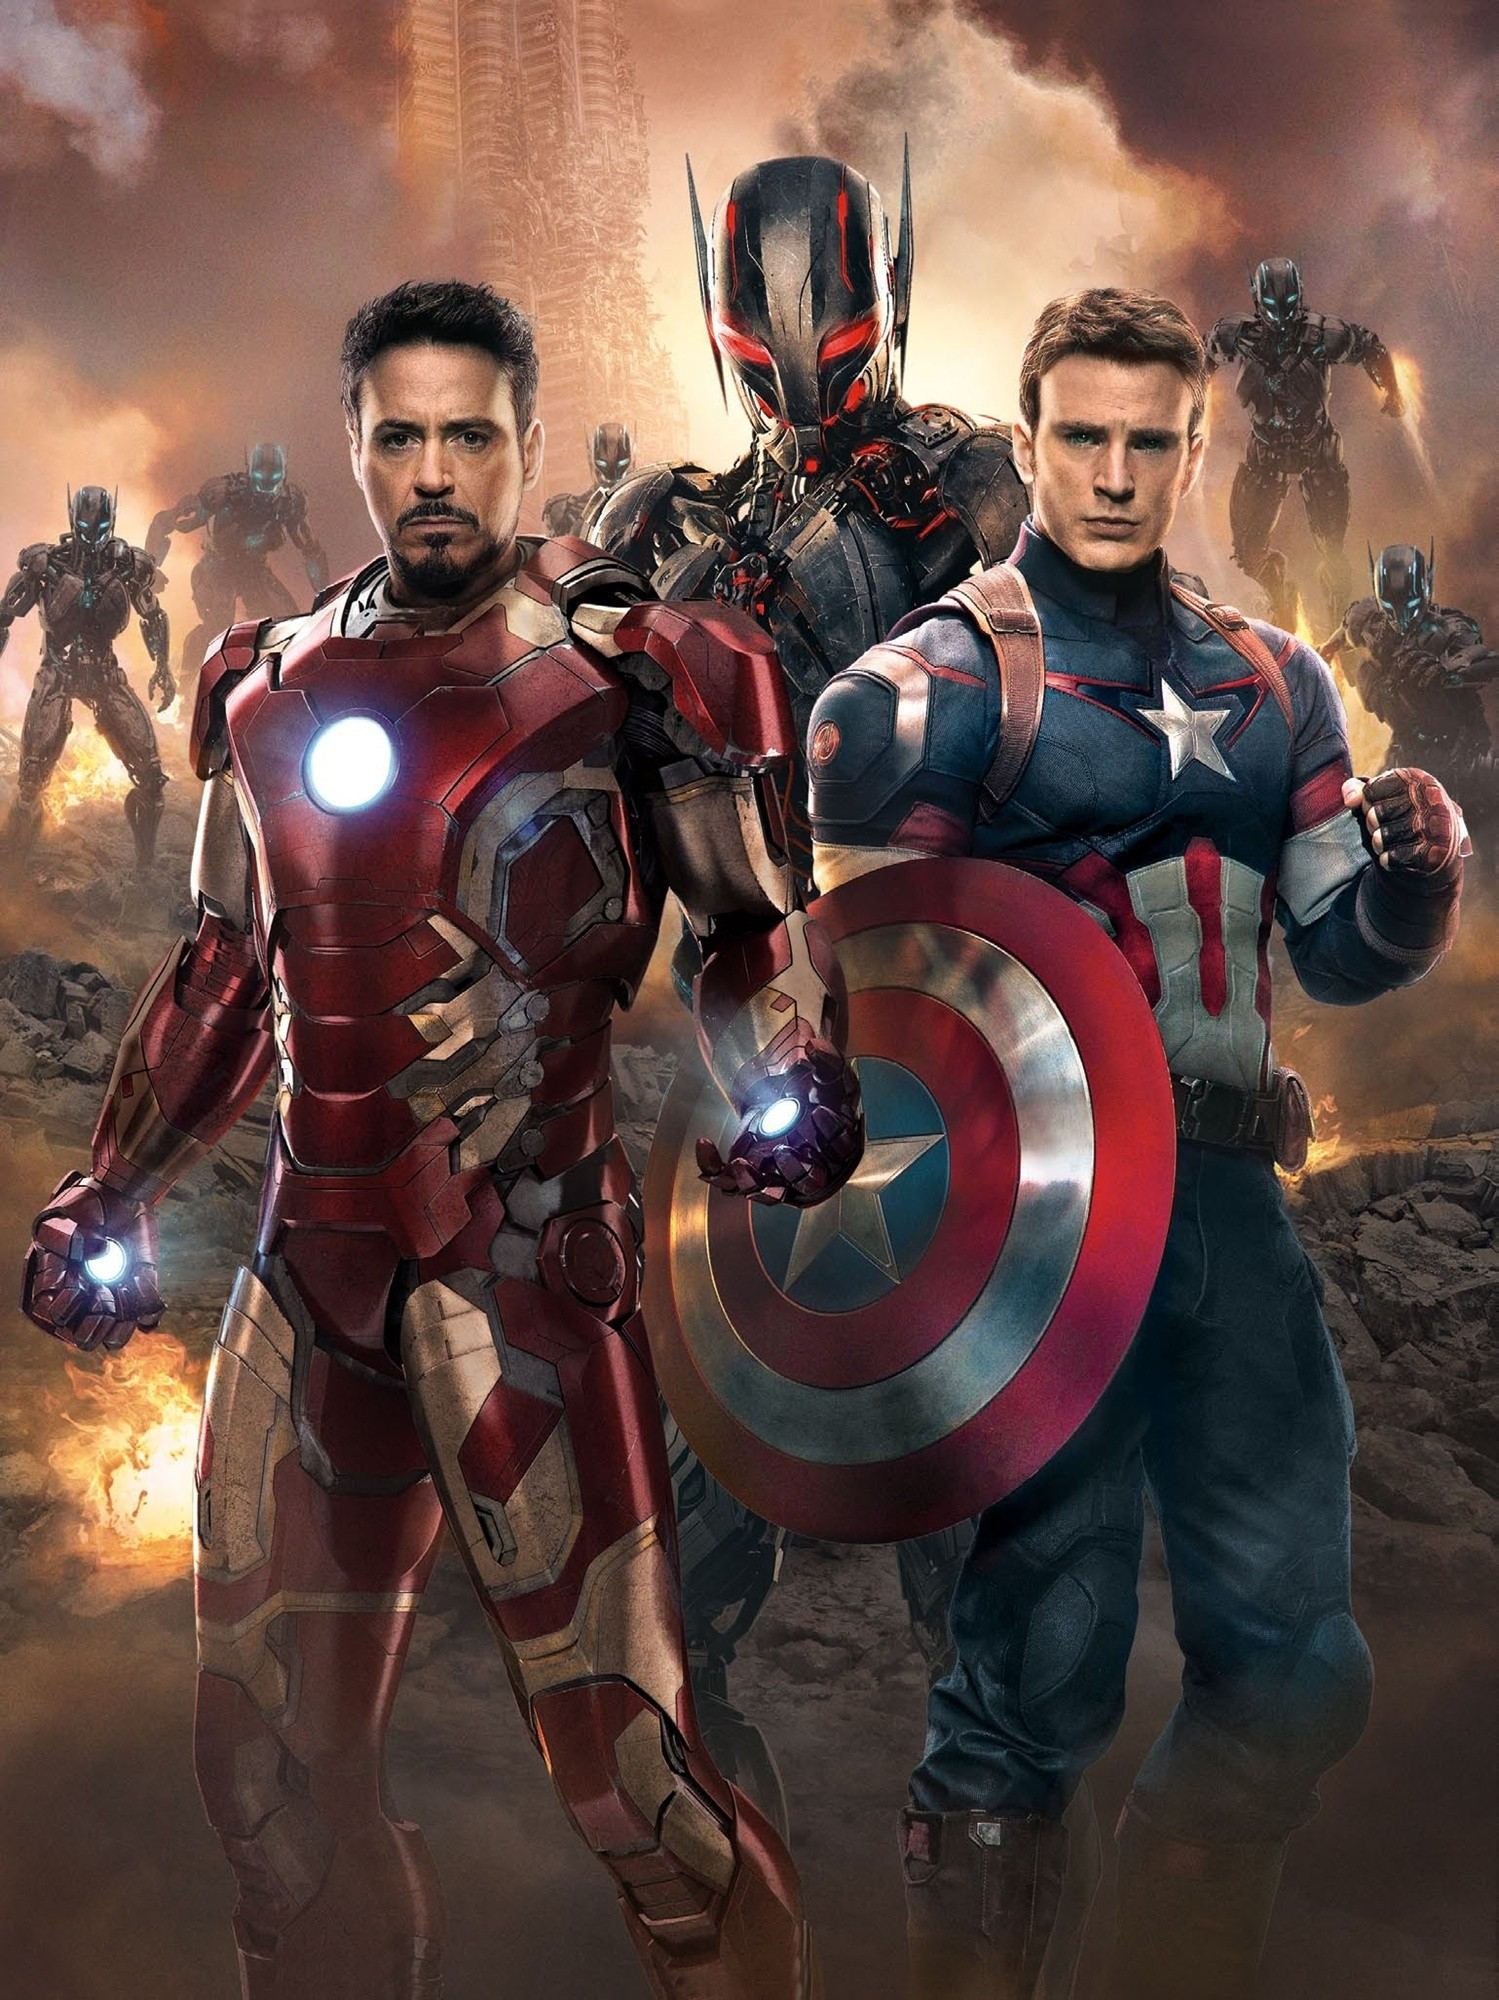 Robert Downey Jr. stars as Tony Stark/Iron Man and Chris Evans stars as Steve Rogers/Captain America in Walt Disney Pictures' Avengers: Age of Ultron (2015)